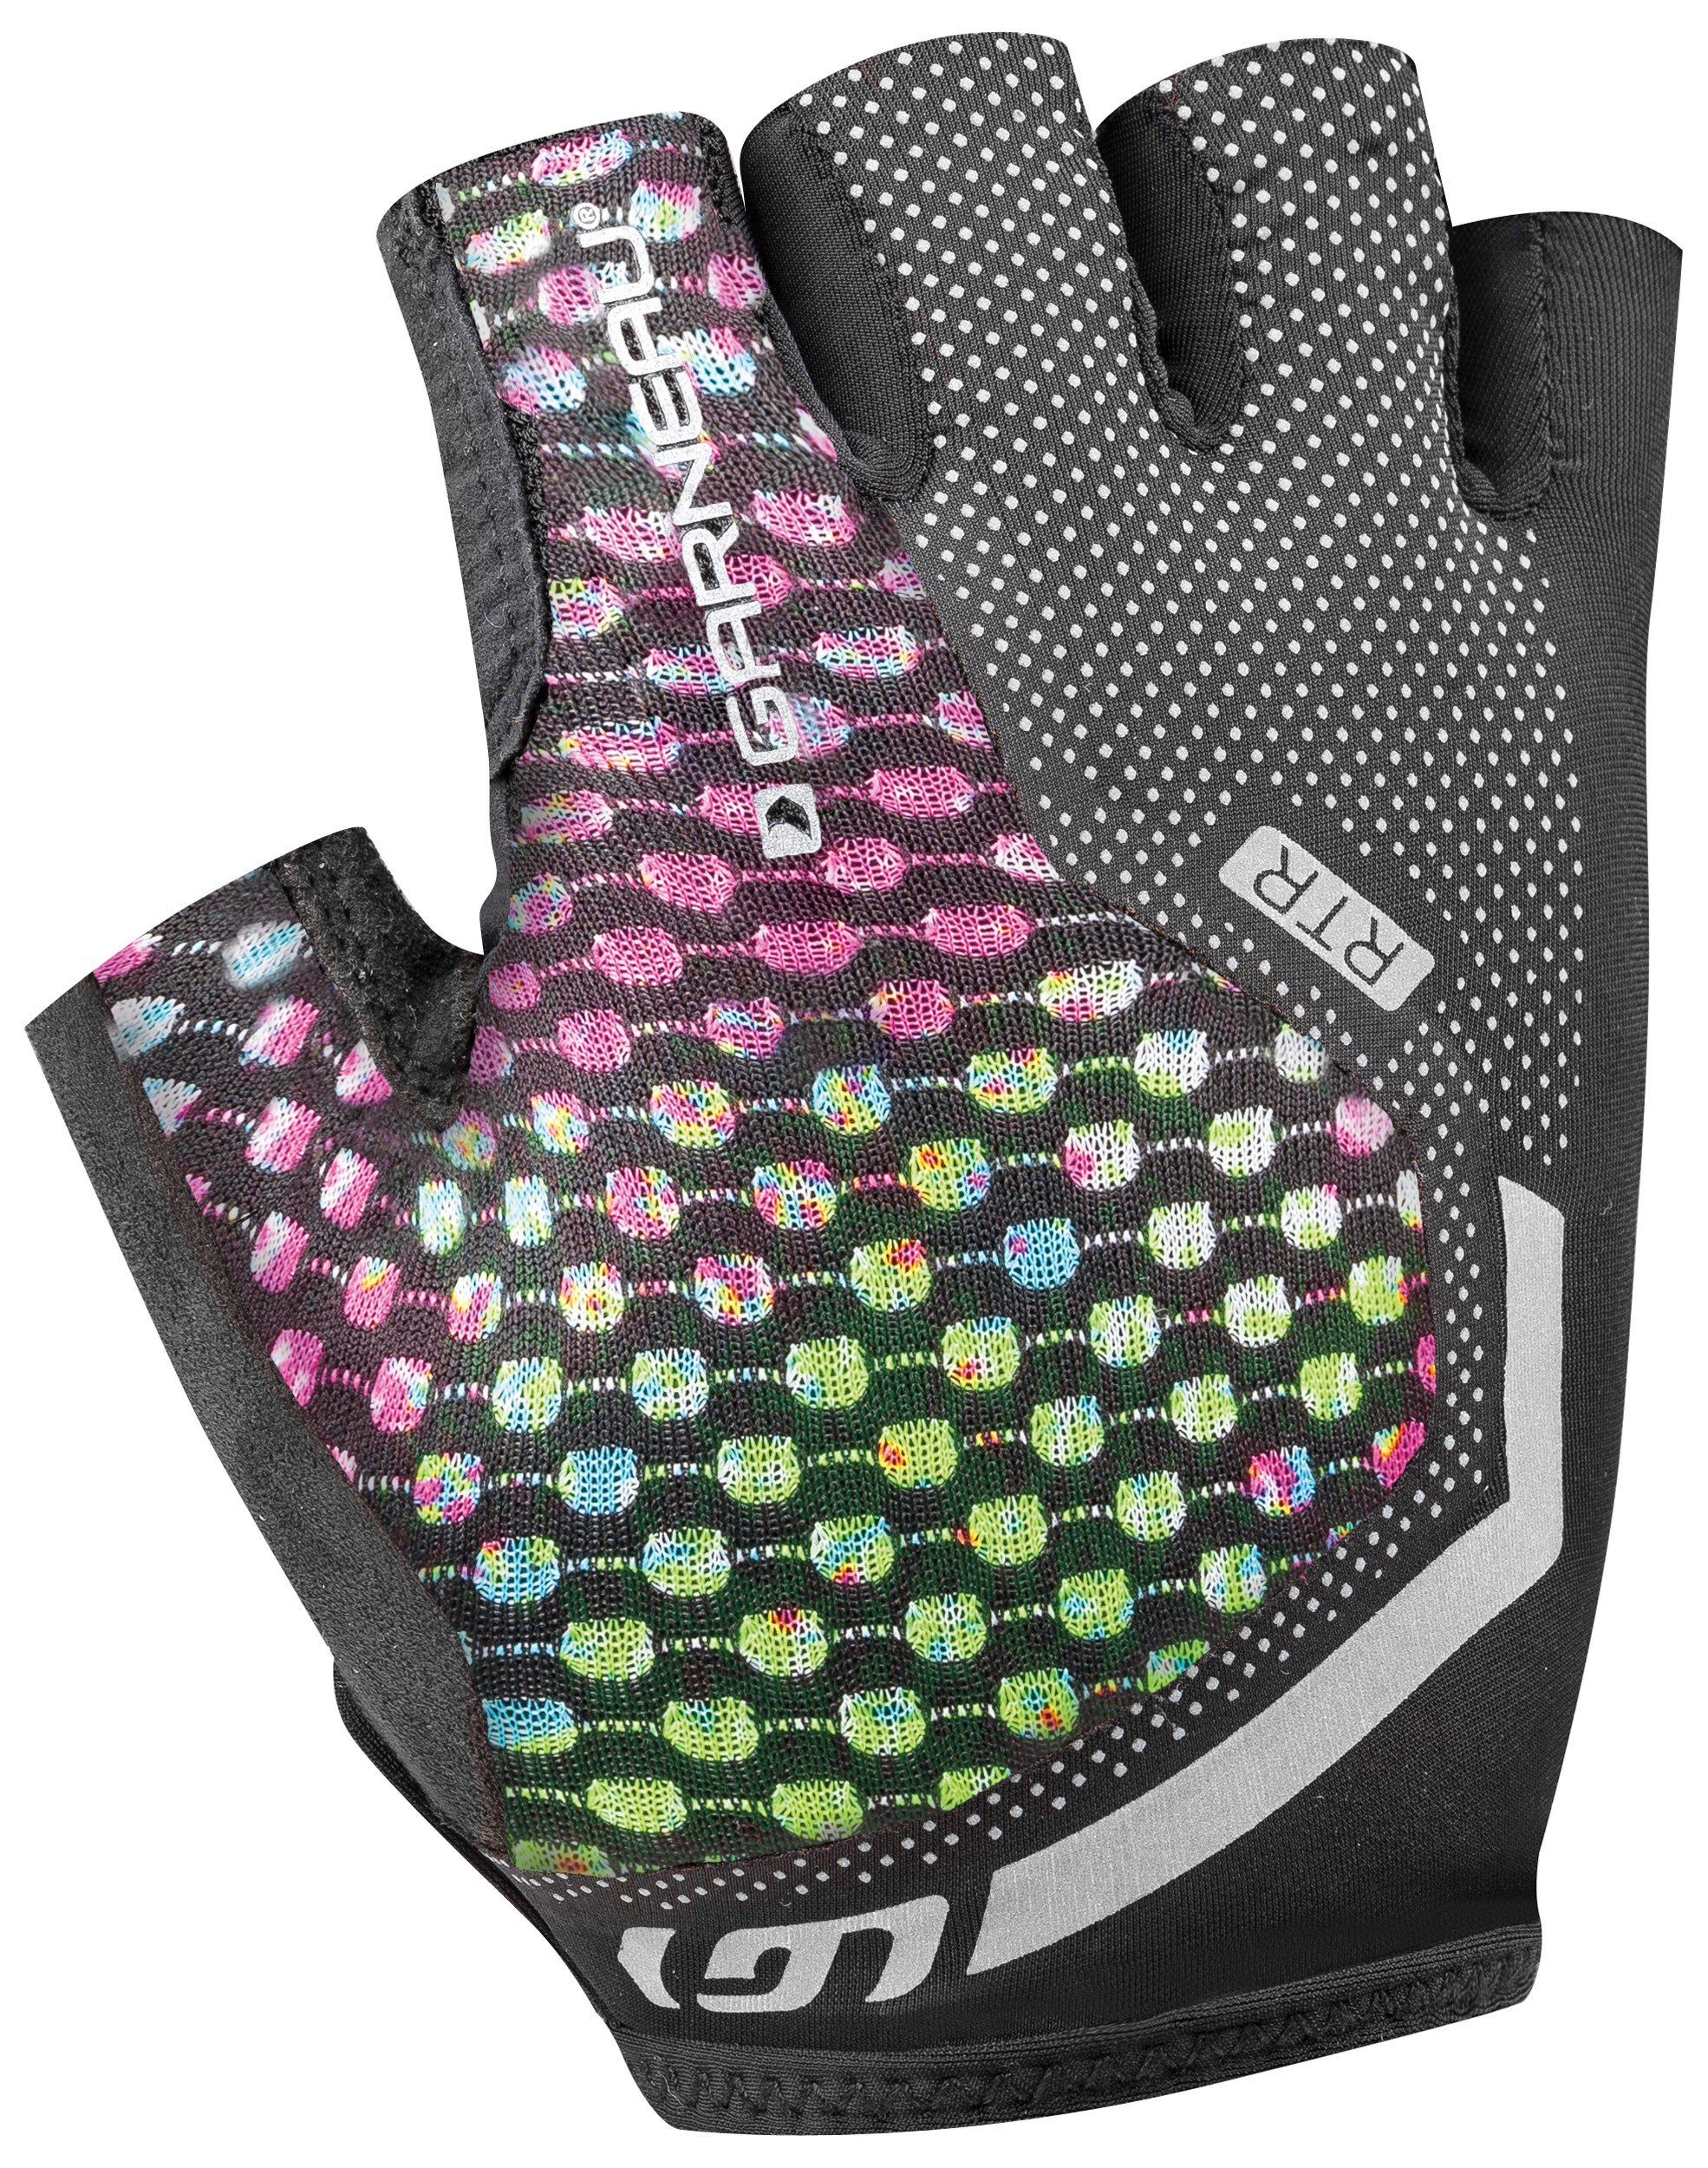 GARNEAU Mondo Sprint Lady Glove Multi Color Black